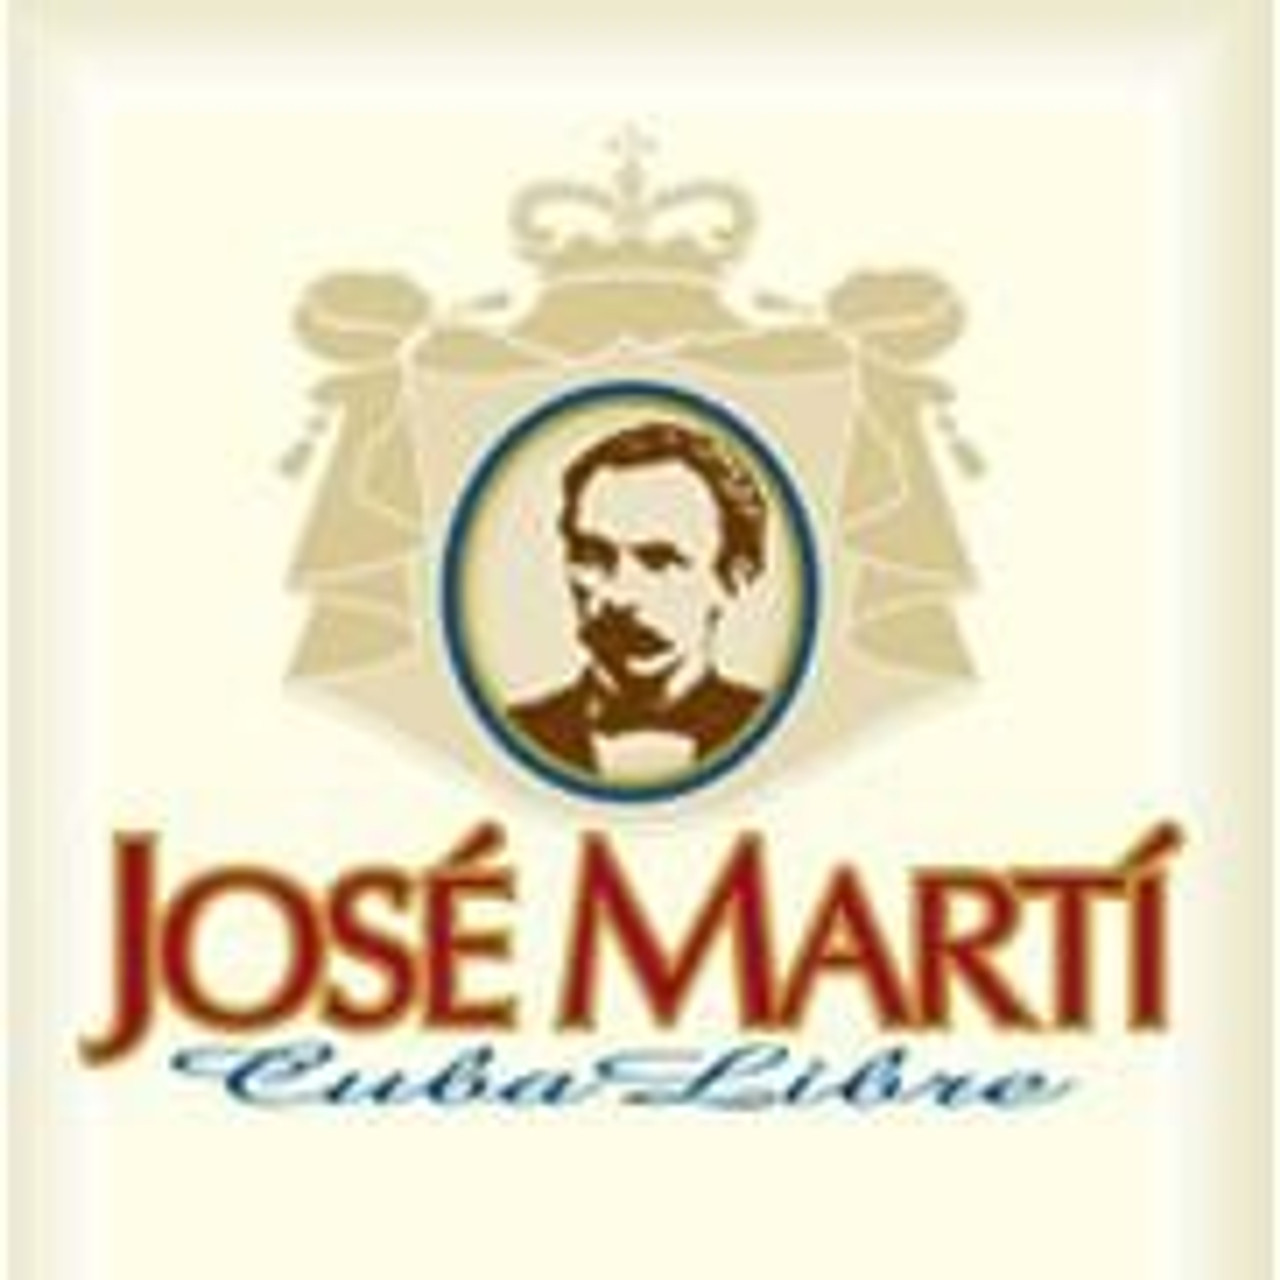 Jose Marti Logo